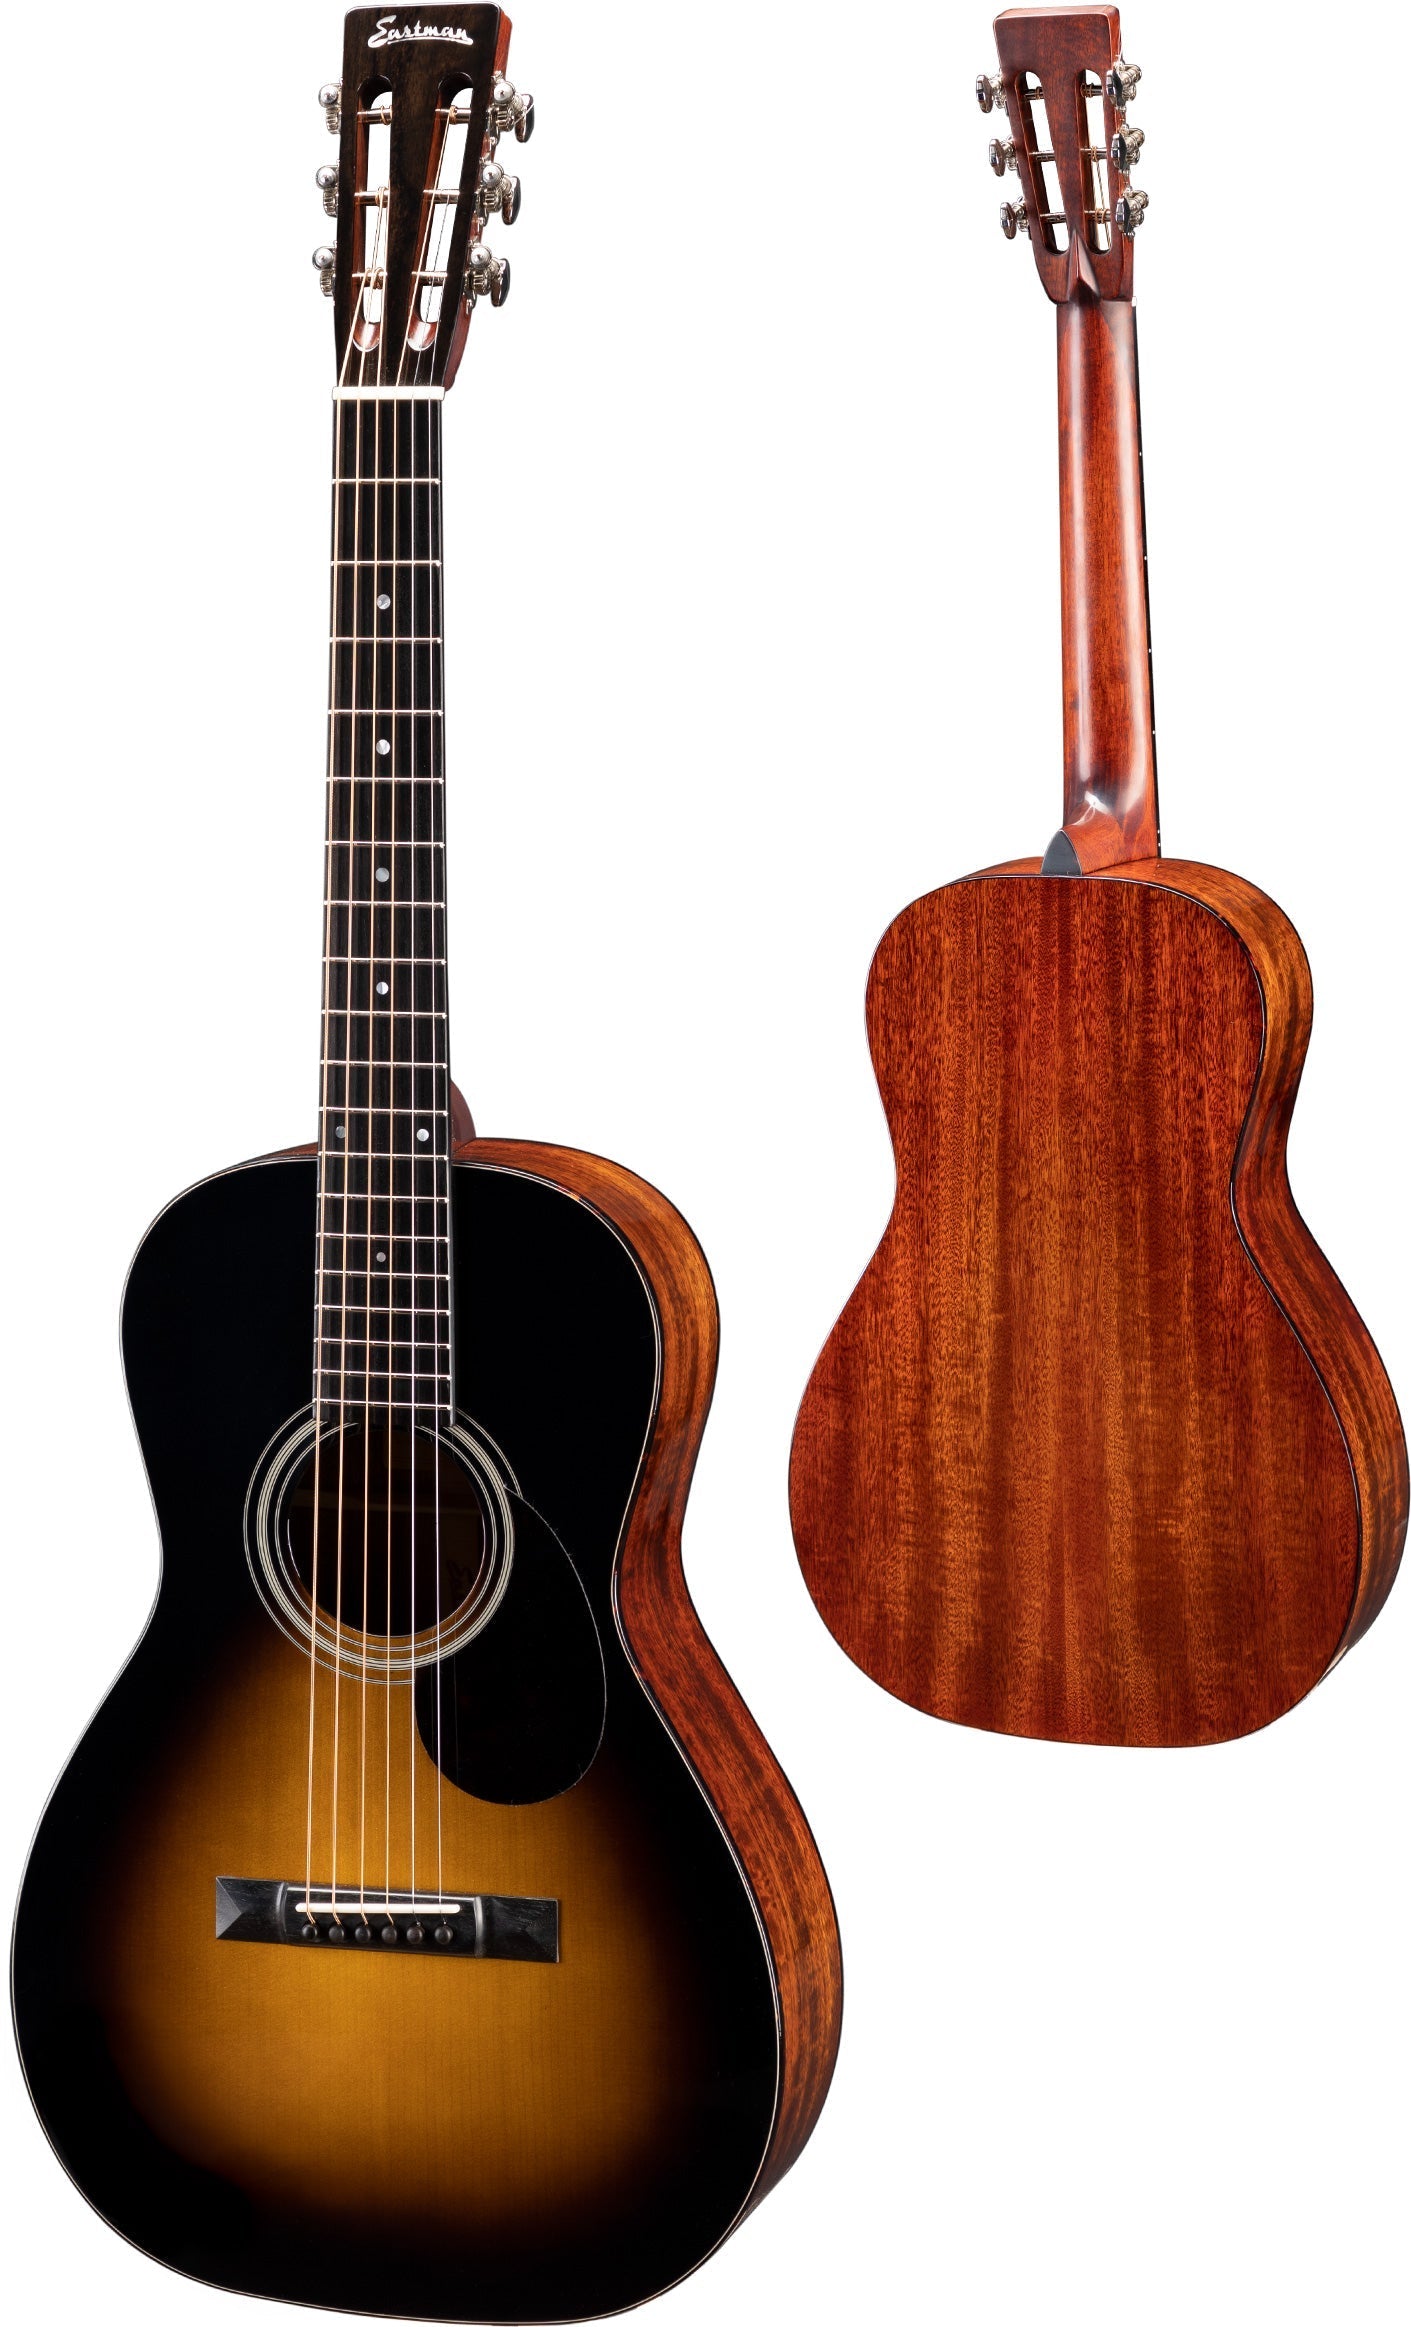 Eastman E10PL-SB  Sunburst Parlour model Left handed, Acoustic Guitar for sale at Richards Guitars.